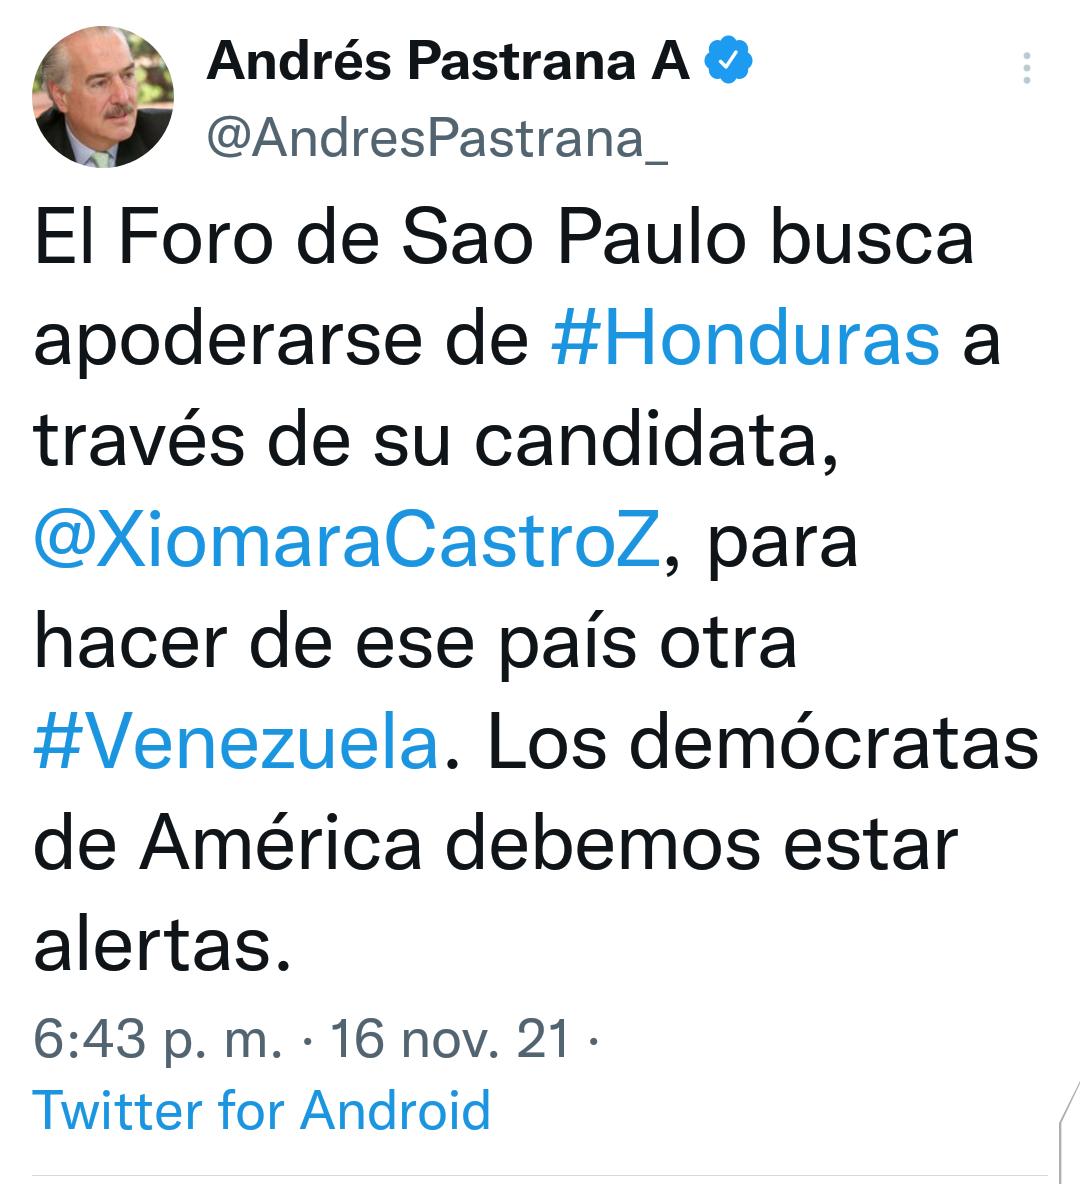 Pastrana foro Sao Paulo apodera de Honduras